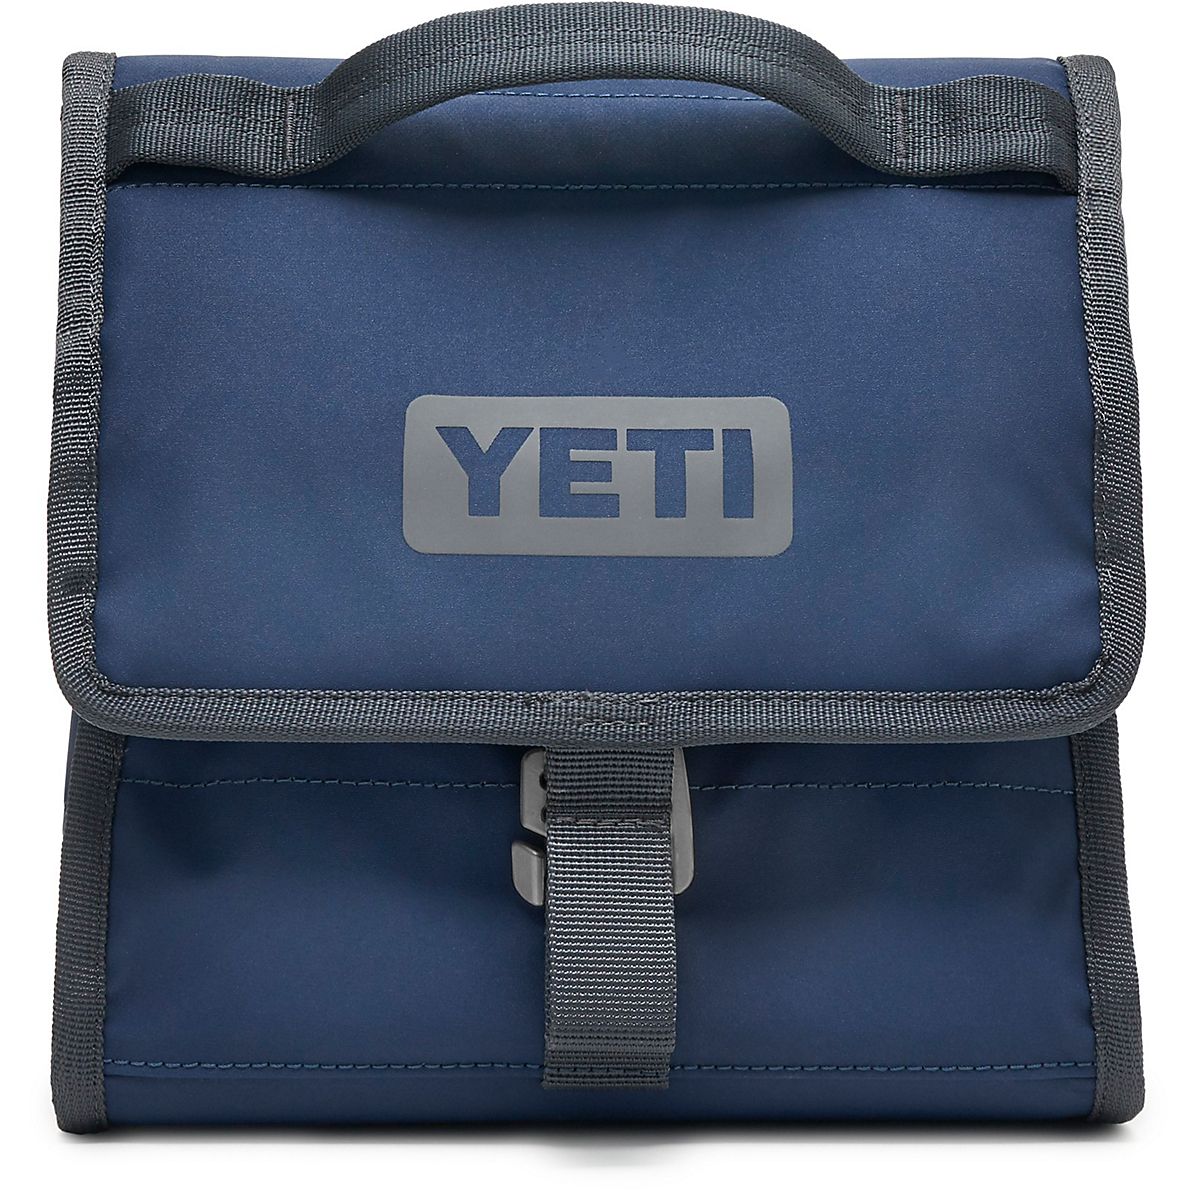 The perfect work lunch bag 🌸 #yeti #yetilunchbag #barbie